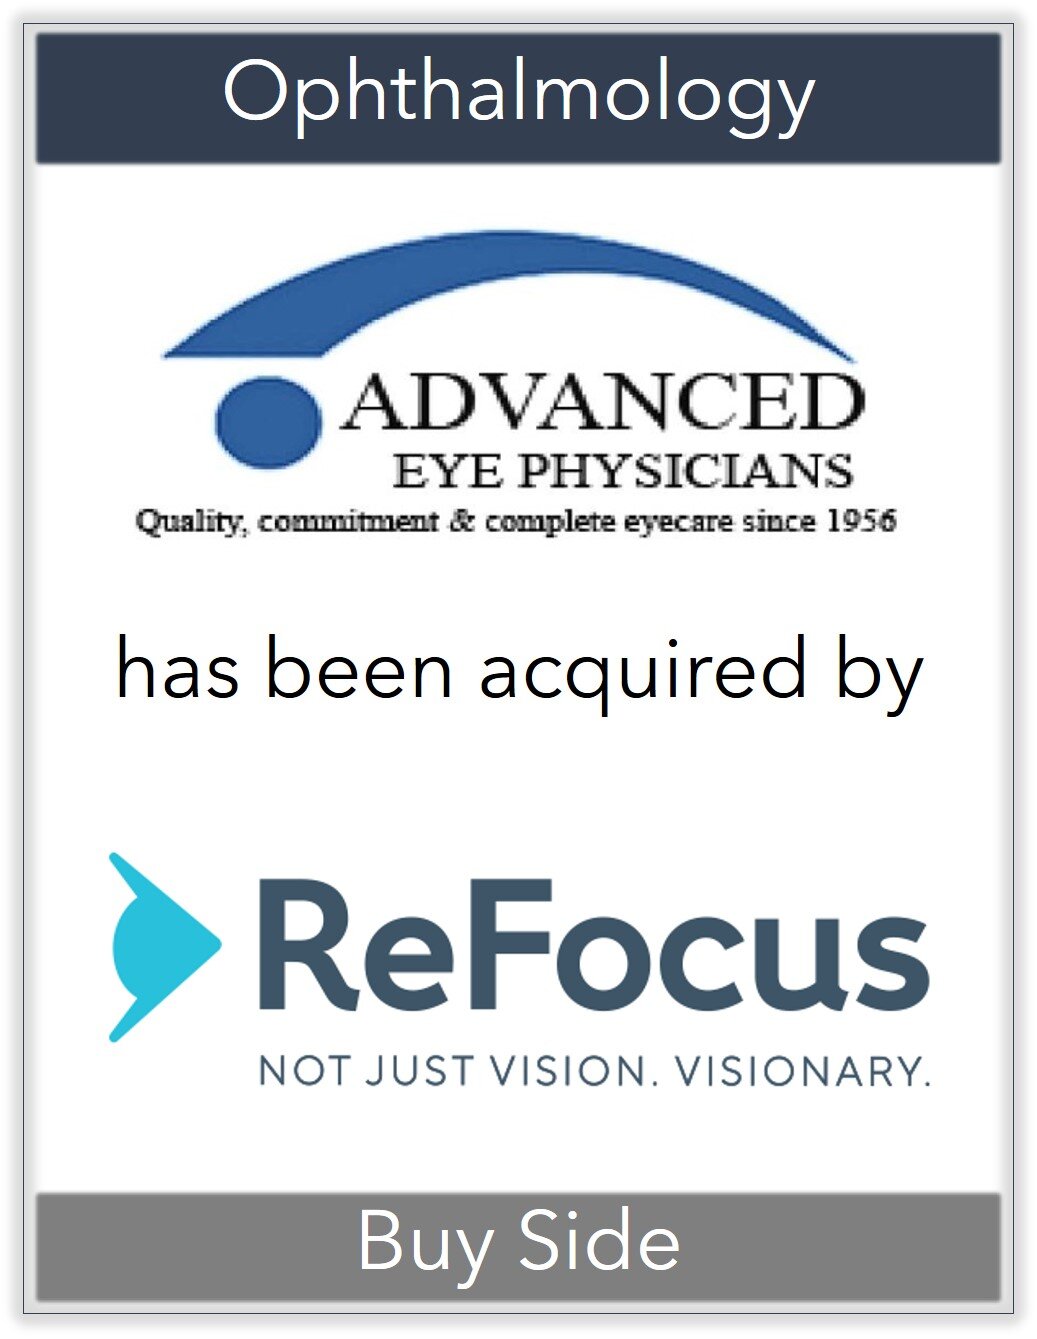 Advanced Eye Physicians _ ReFocus.jpg